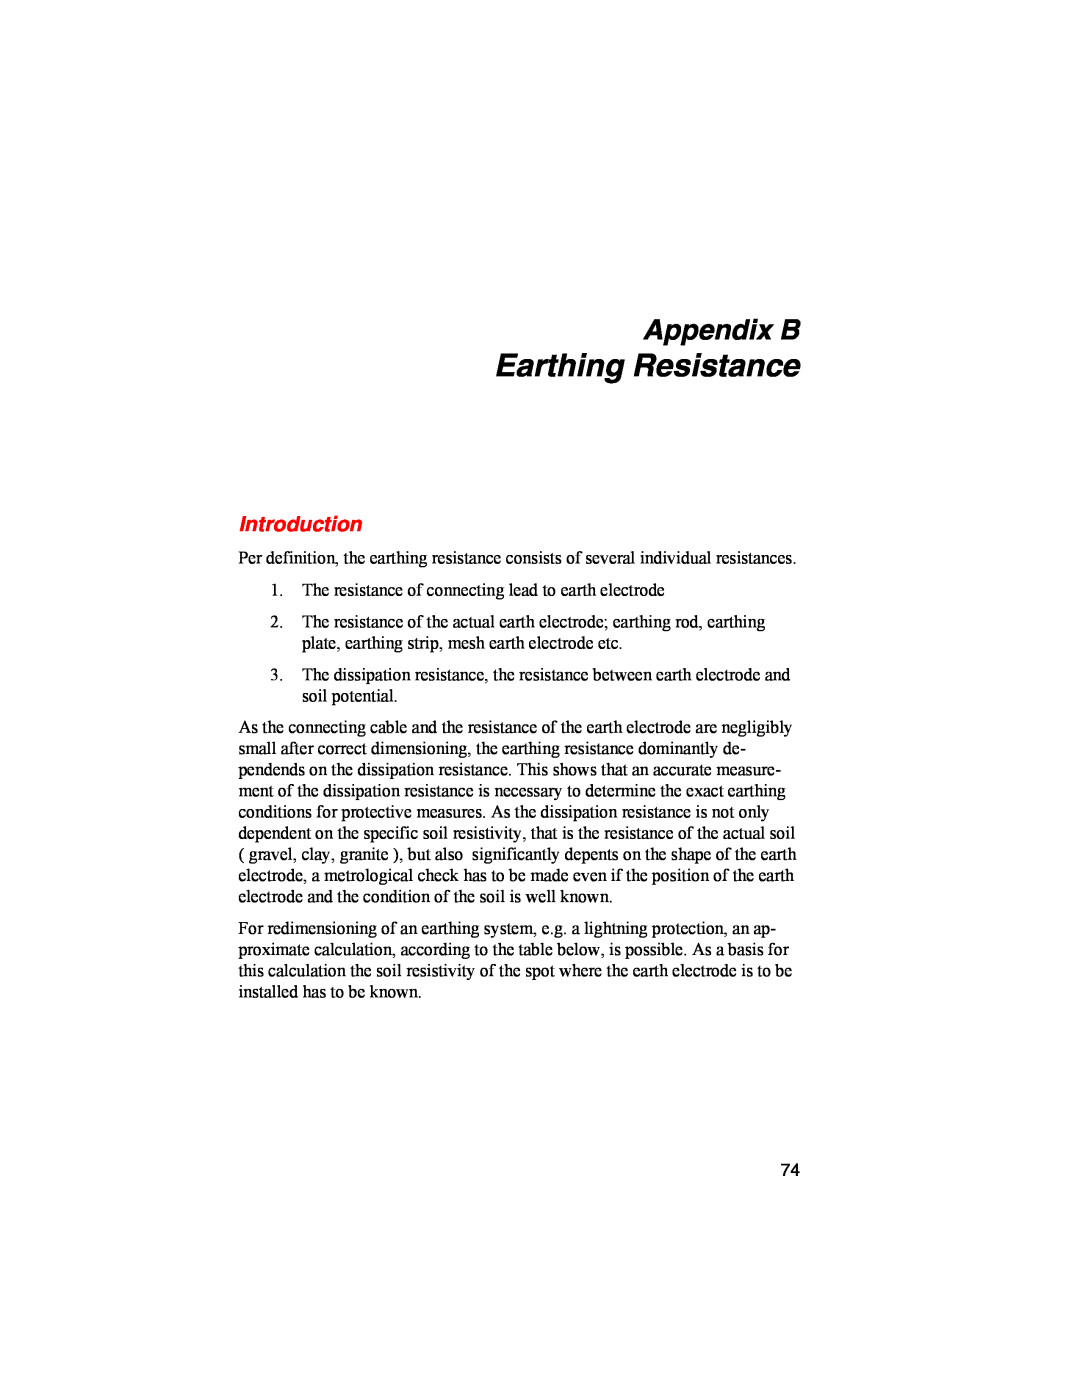 Fluke 1625 user manual Earthing Resistance, Appendix B, Introduction 